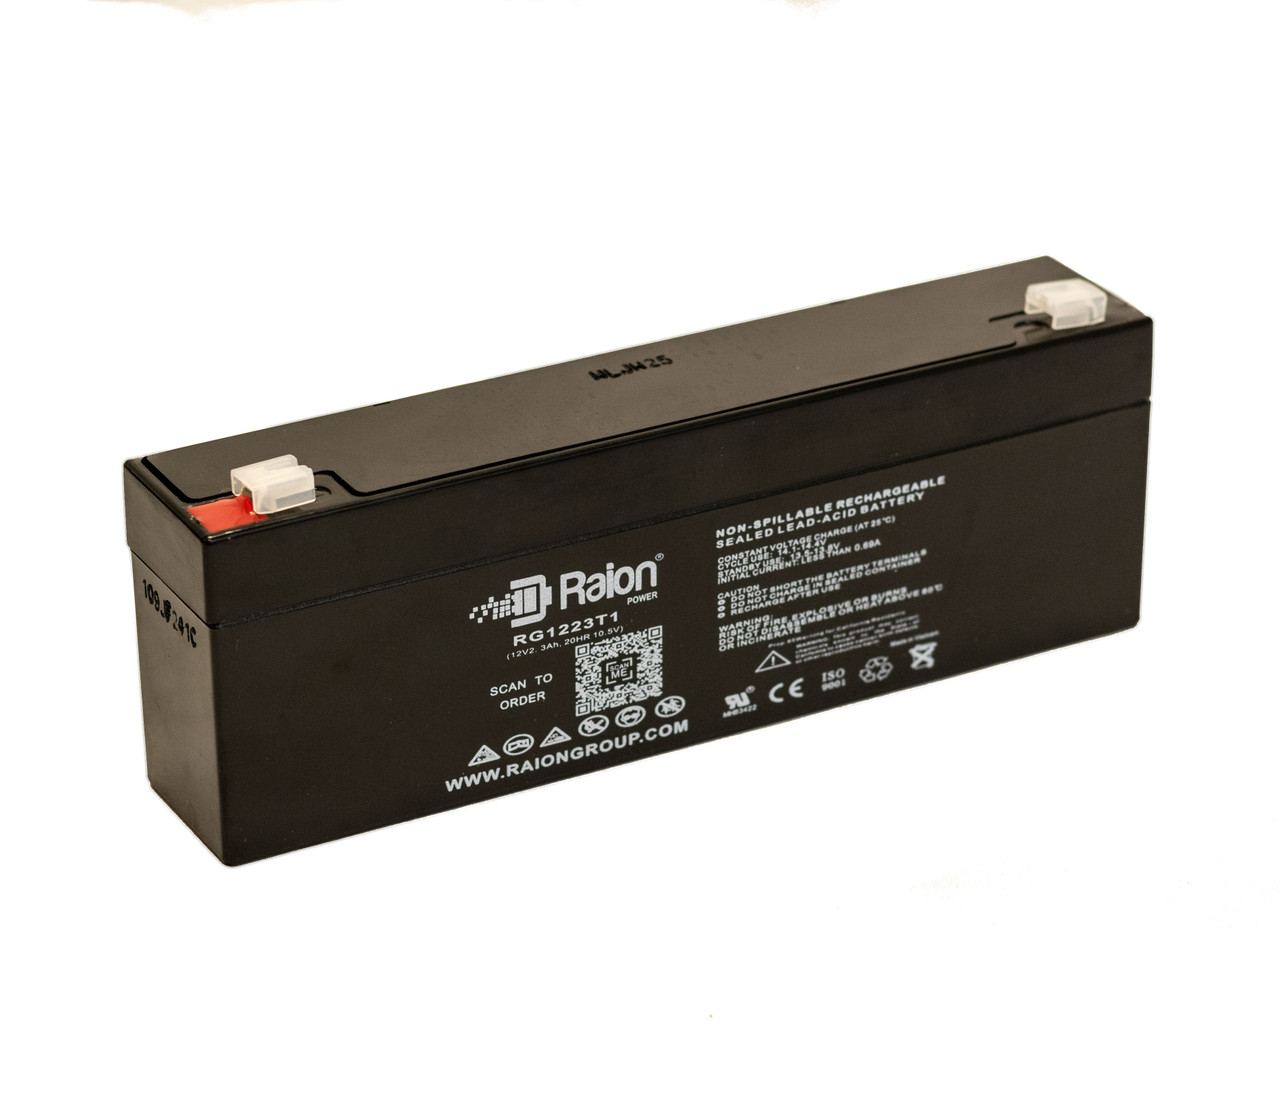 Raion Power RG1223T1 Replacement Battery for Schiller America AT2i Interpretive EKG Machine